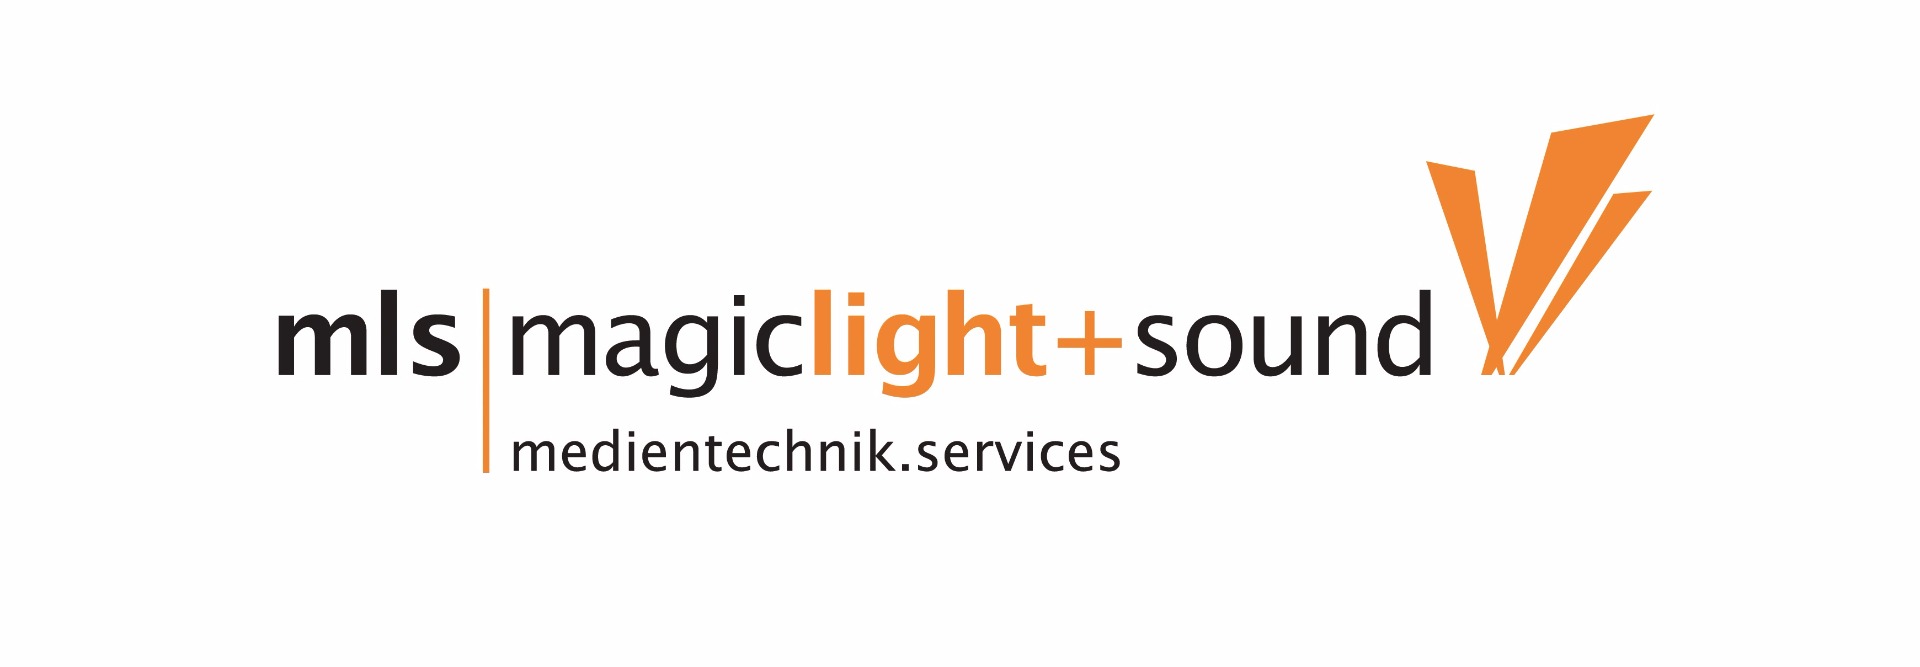 Magic Light + Sound Latest European Rental House to Stock Elation LightingGallery Image mlsp logo 